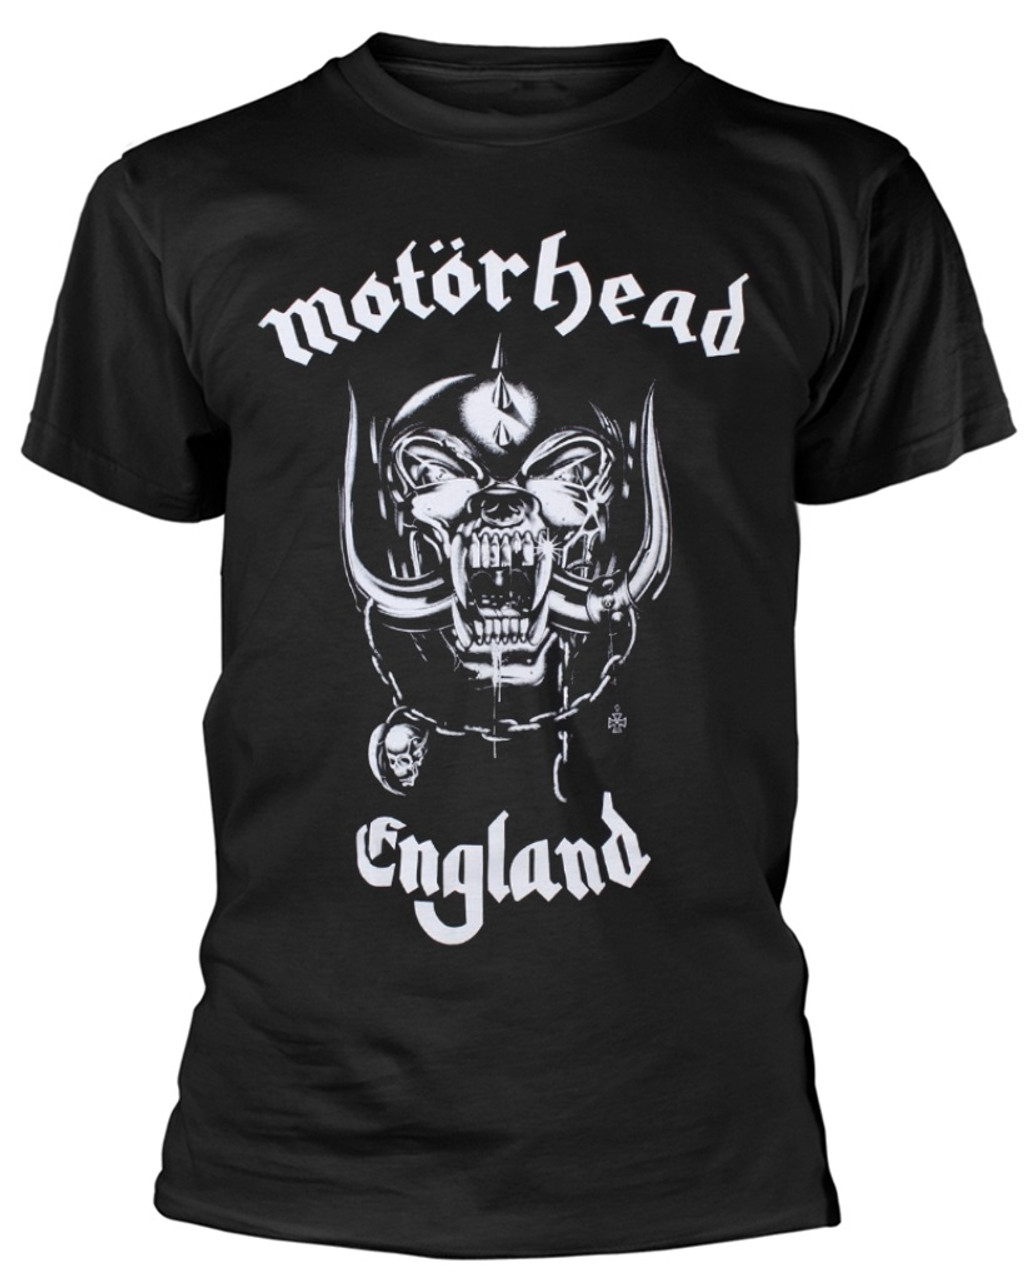 Motorhead 'England' T-Shirt